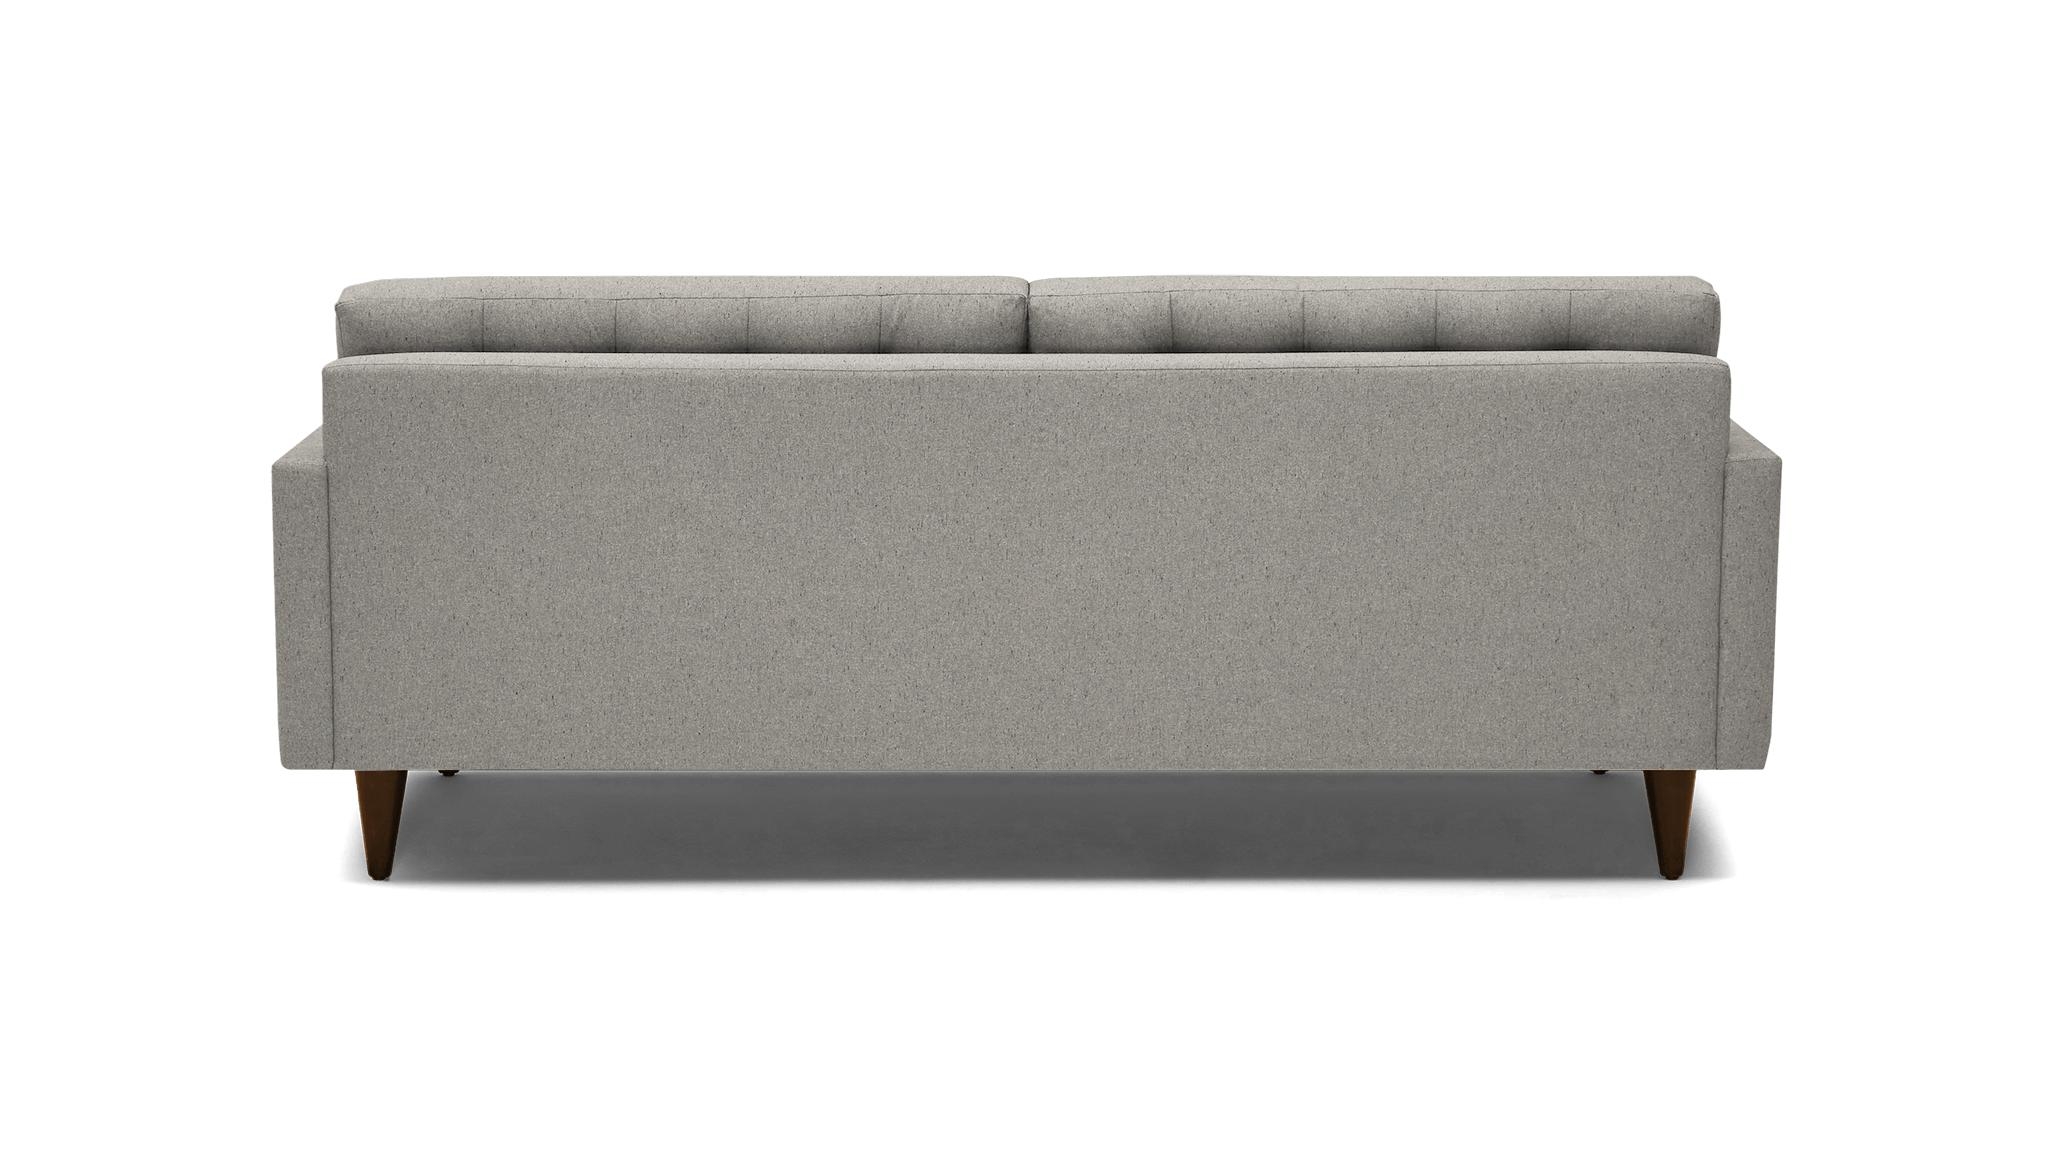 White Eliot Mid Century Modern Sofa - Bloke Cotton - Mocha - Image 4